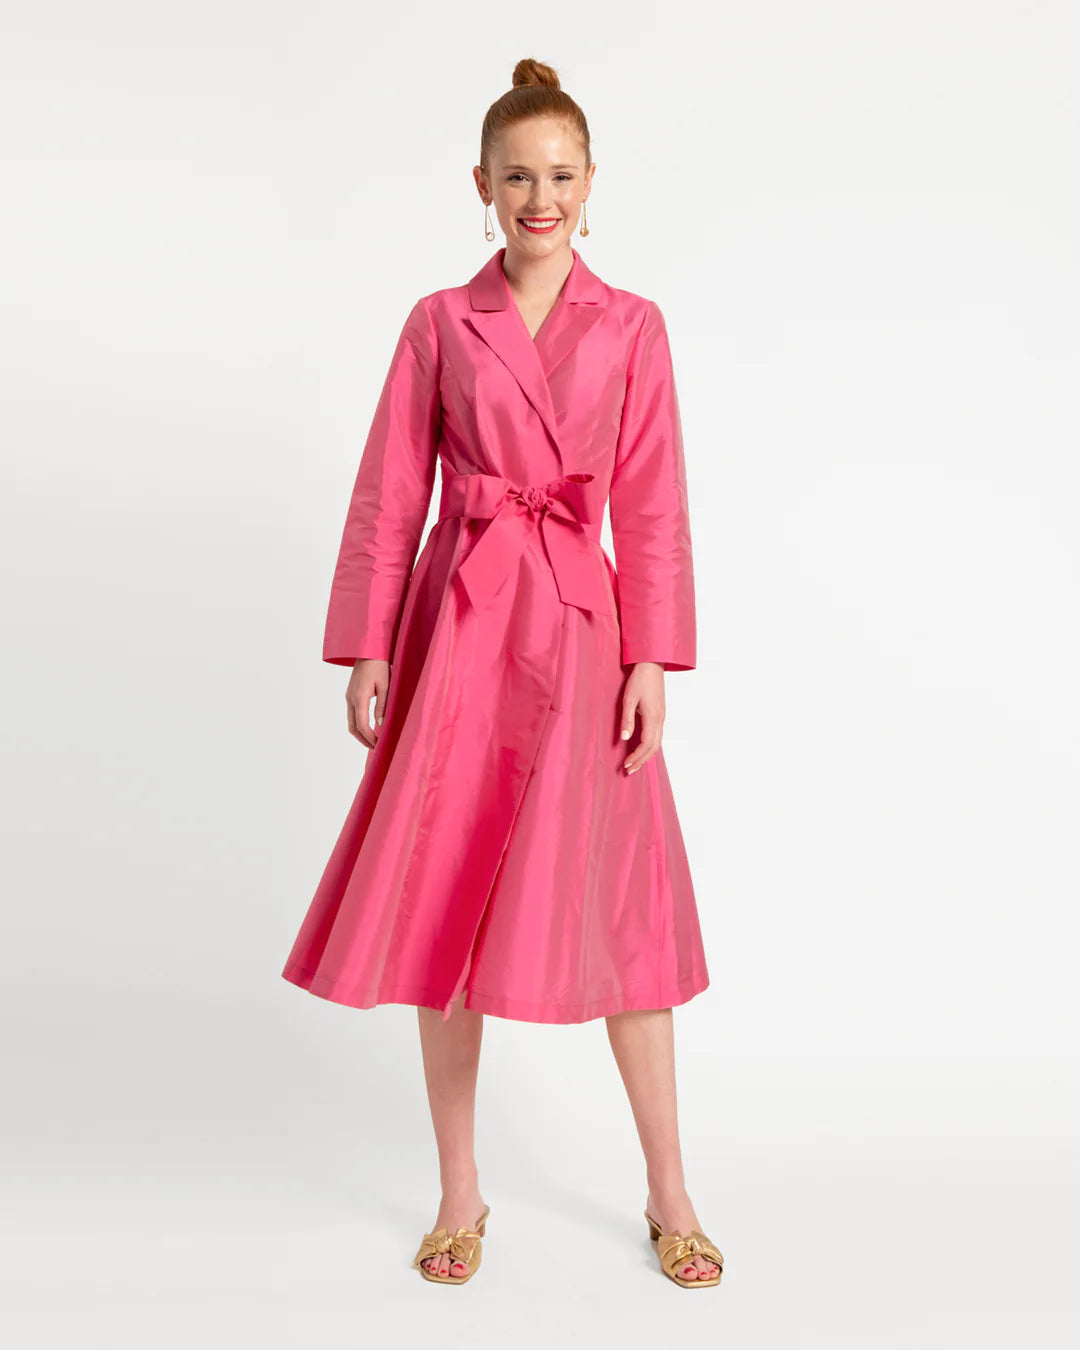 Frances Valentine Lucille Wrap Dress Pink